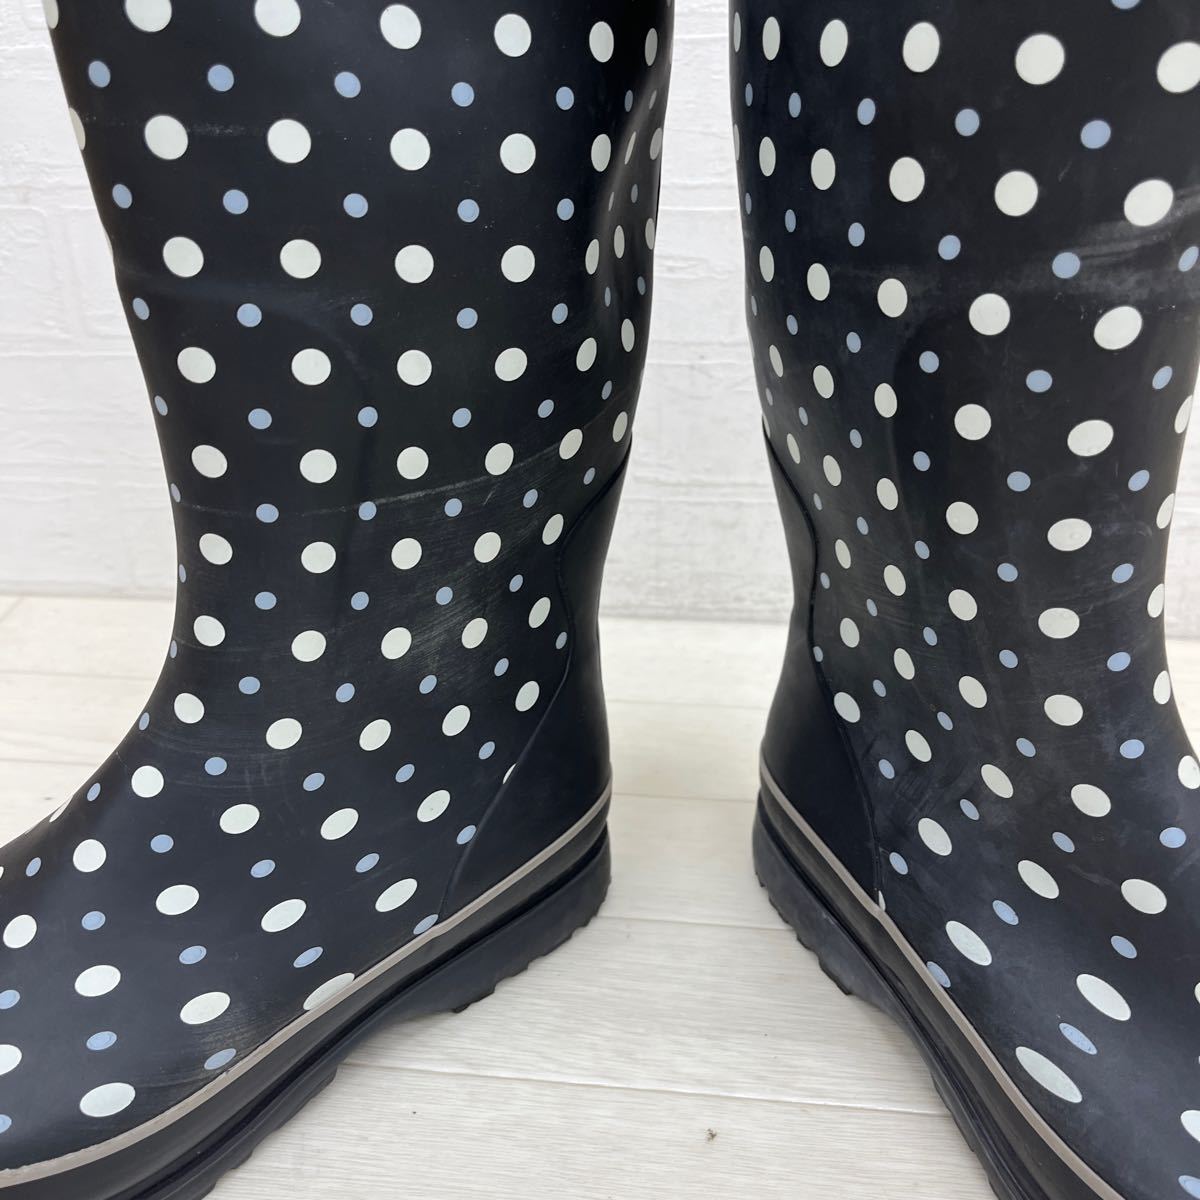 1342* hiromichi nakano Hiromichi Nakano shoes shoes long rain boots rain shoes boots dodo pattern black lady's 23.0